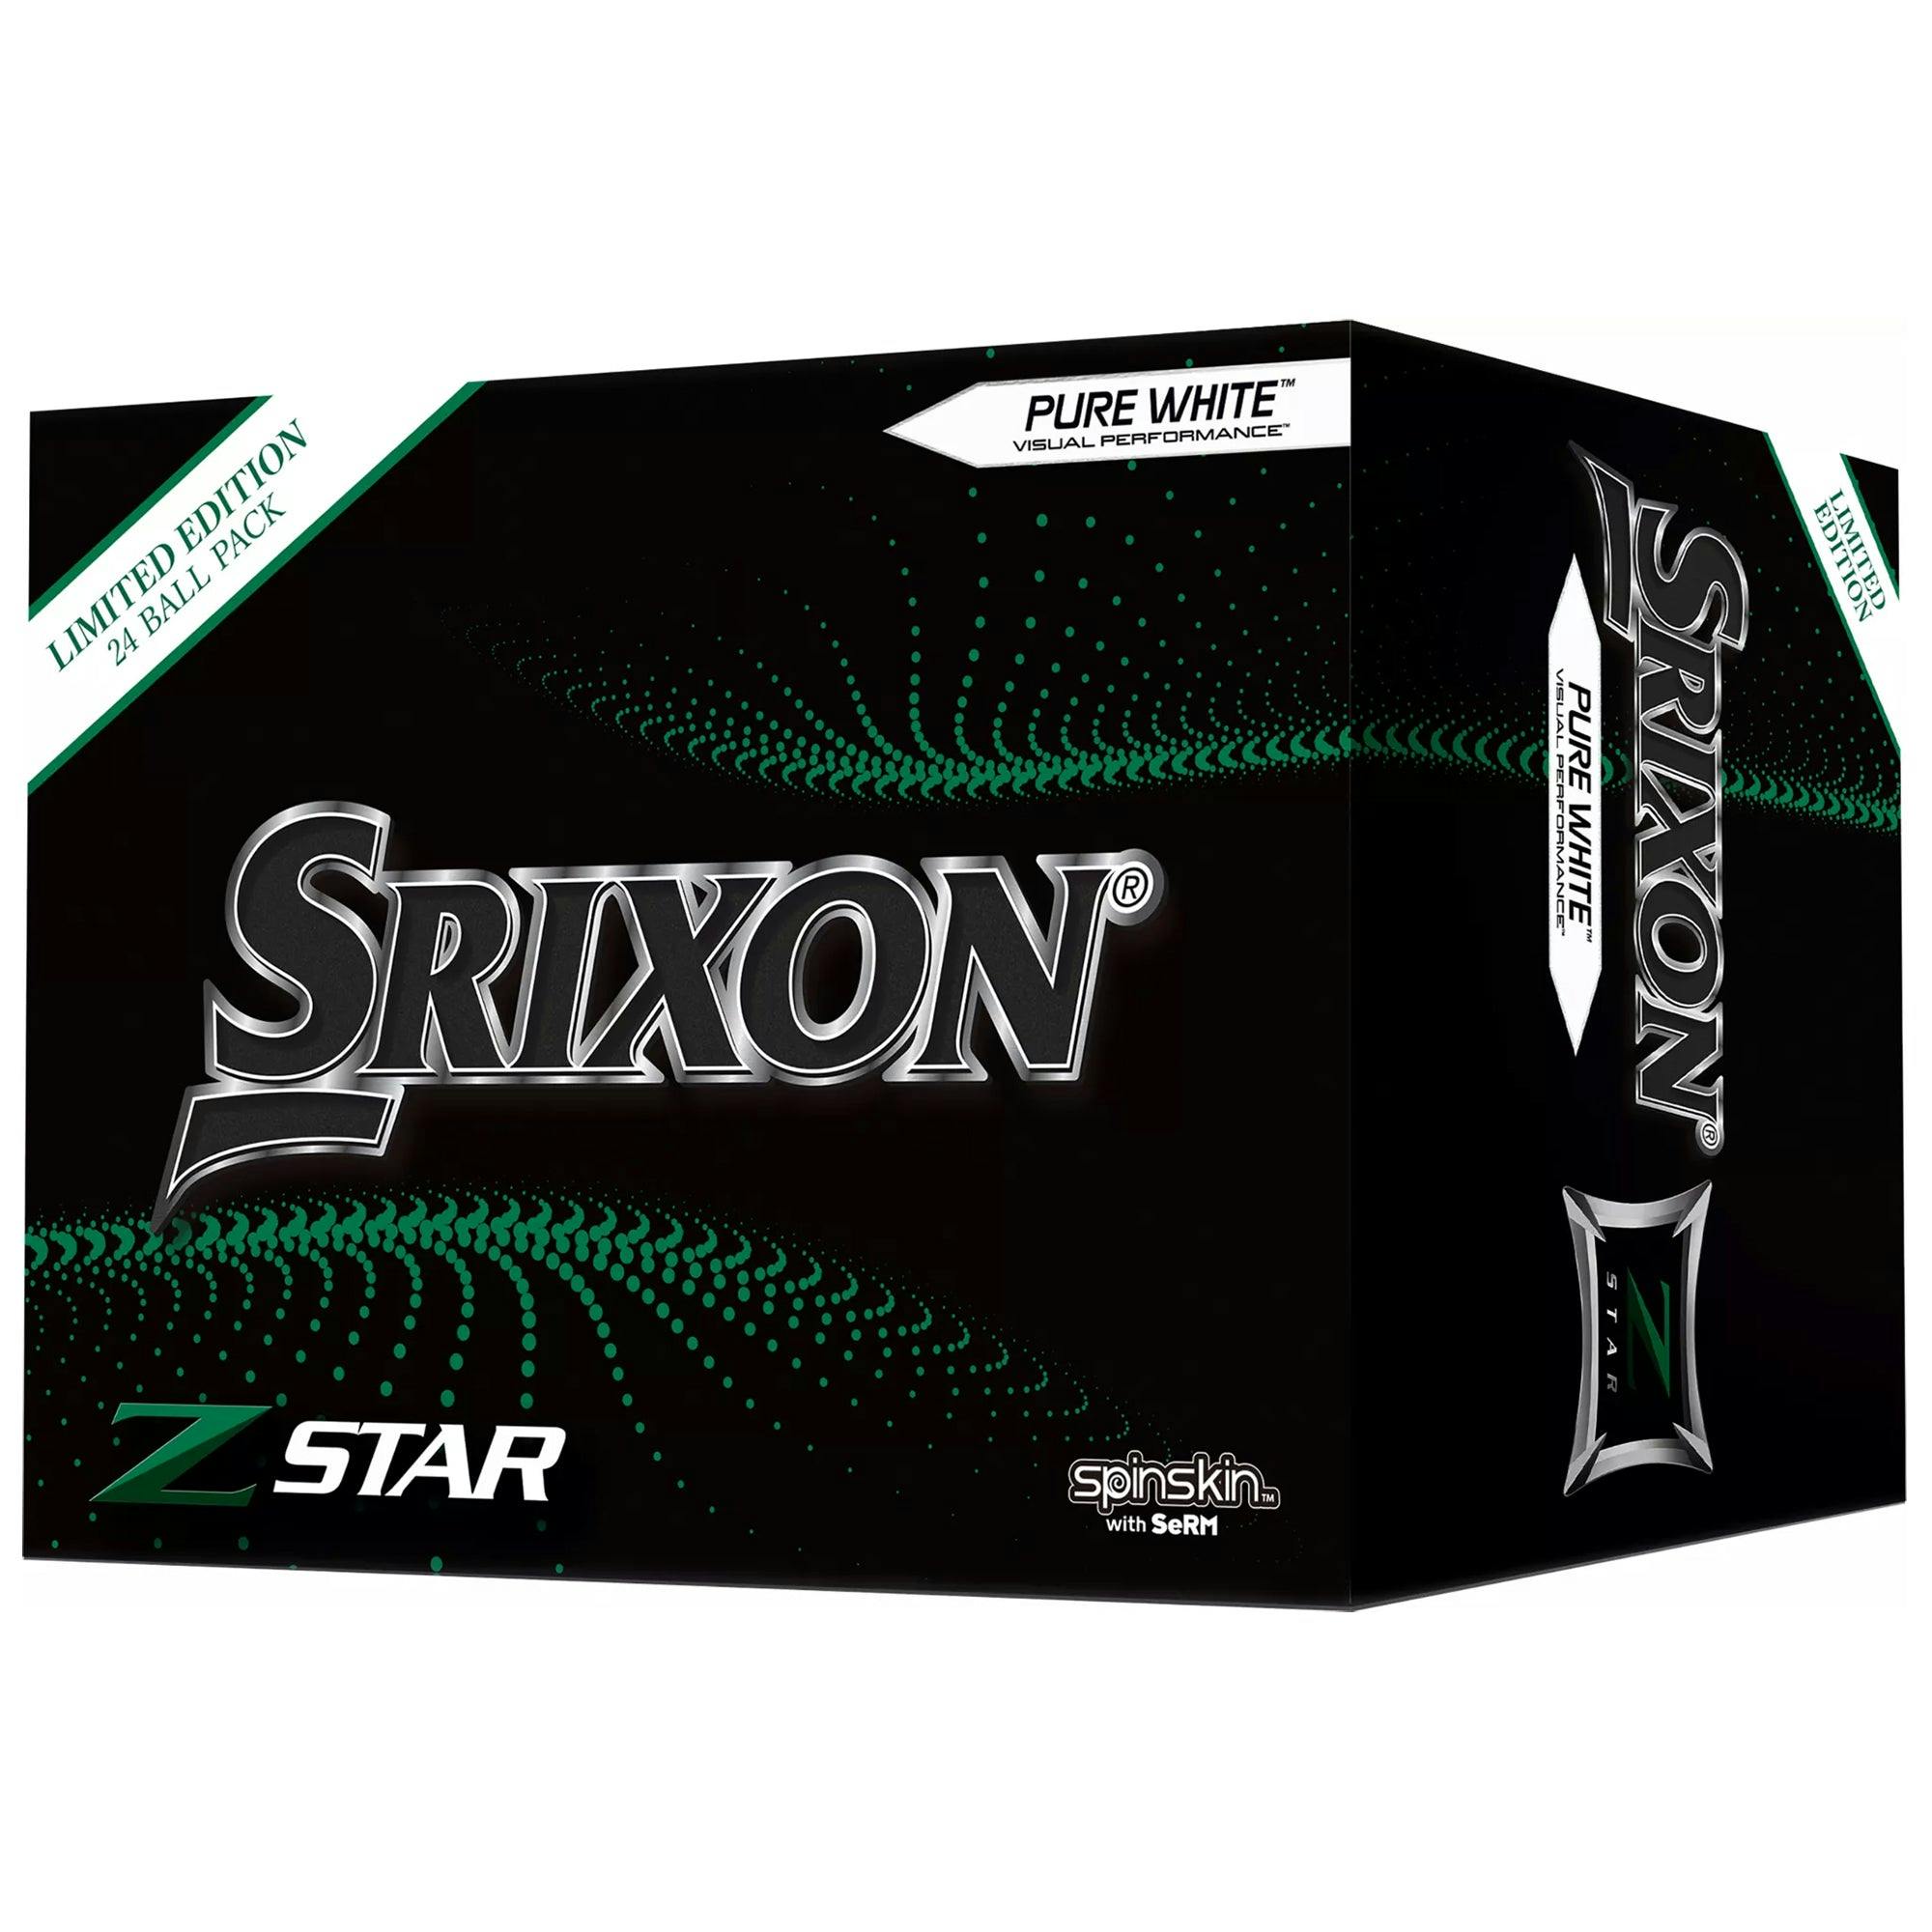 Srixon Z-Star 7 Limited Edition 24 Pack Golf Balls · White